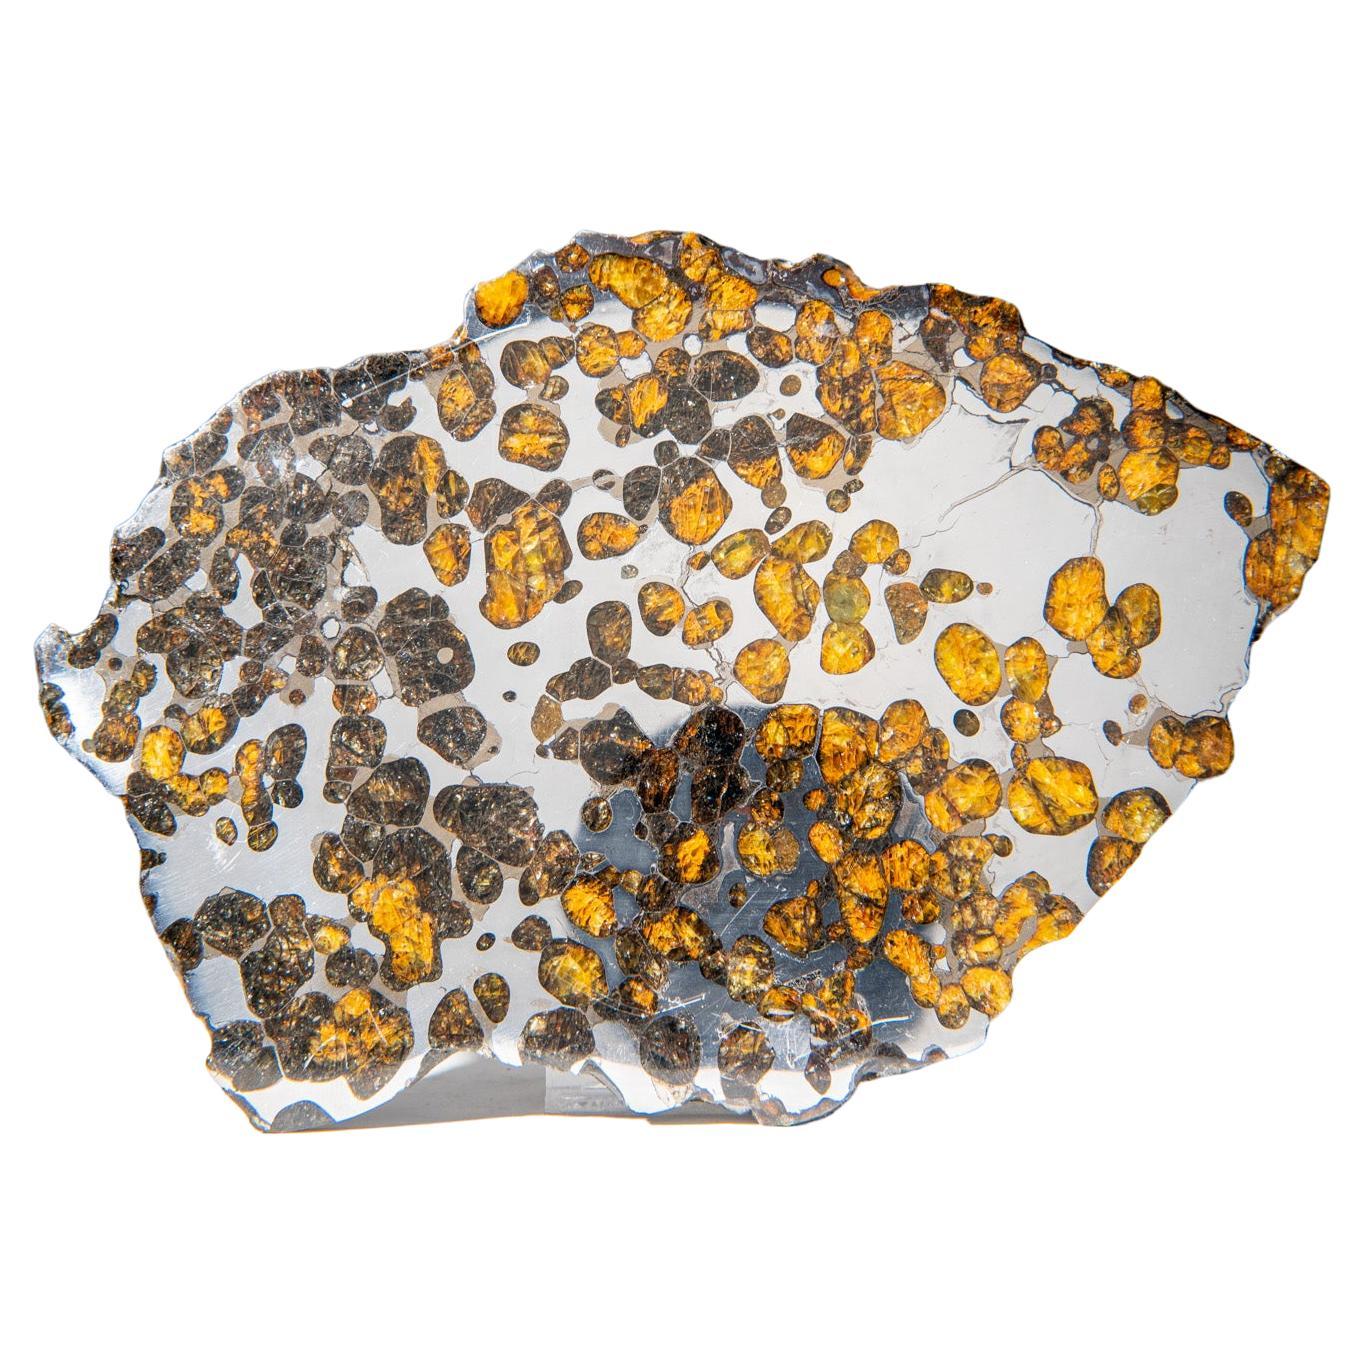 Pallasite naturelle de Seymchan véritable (211.7 grammes)